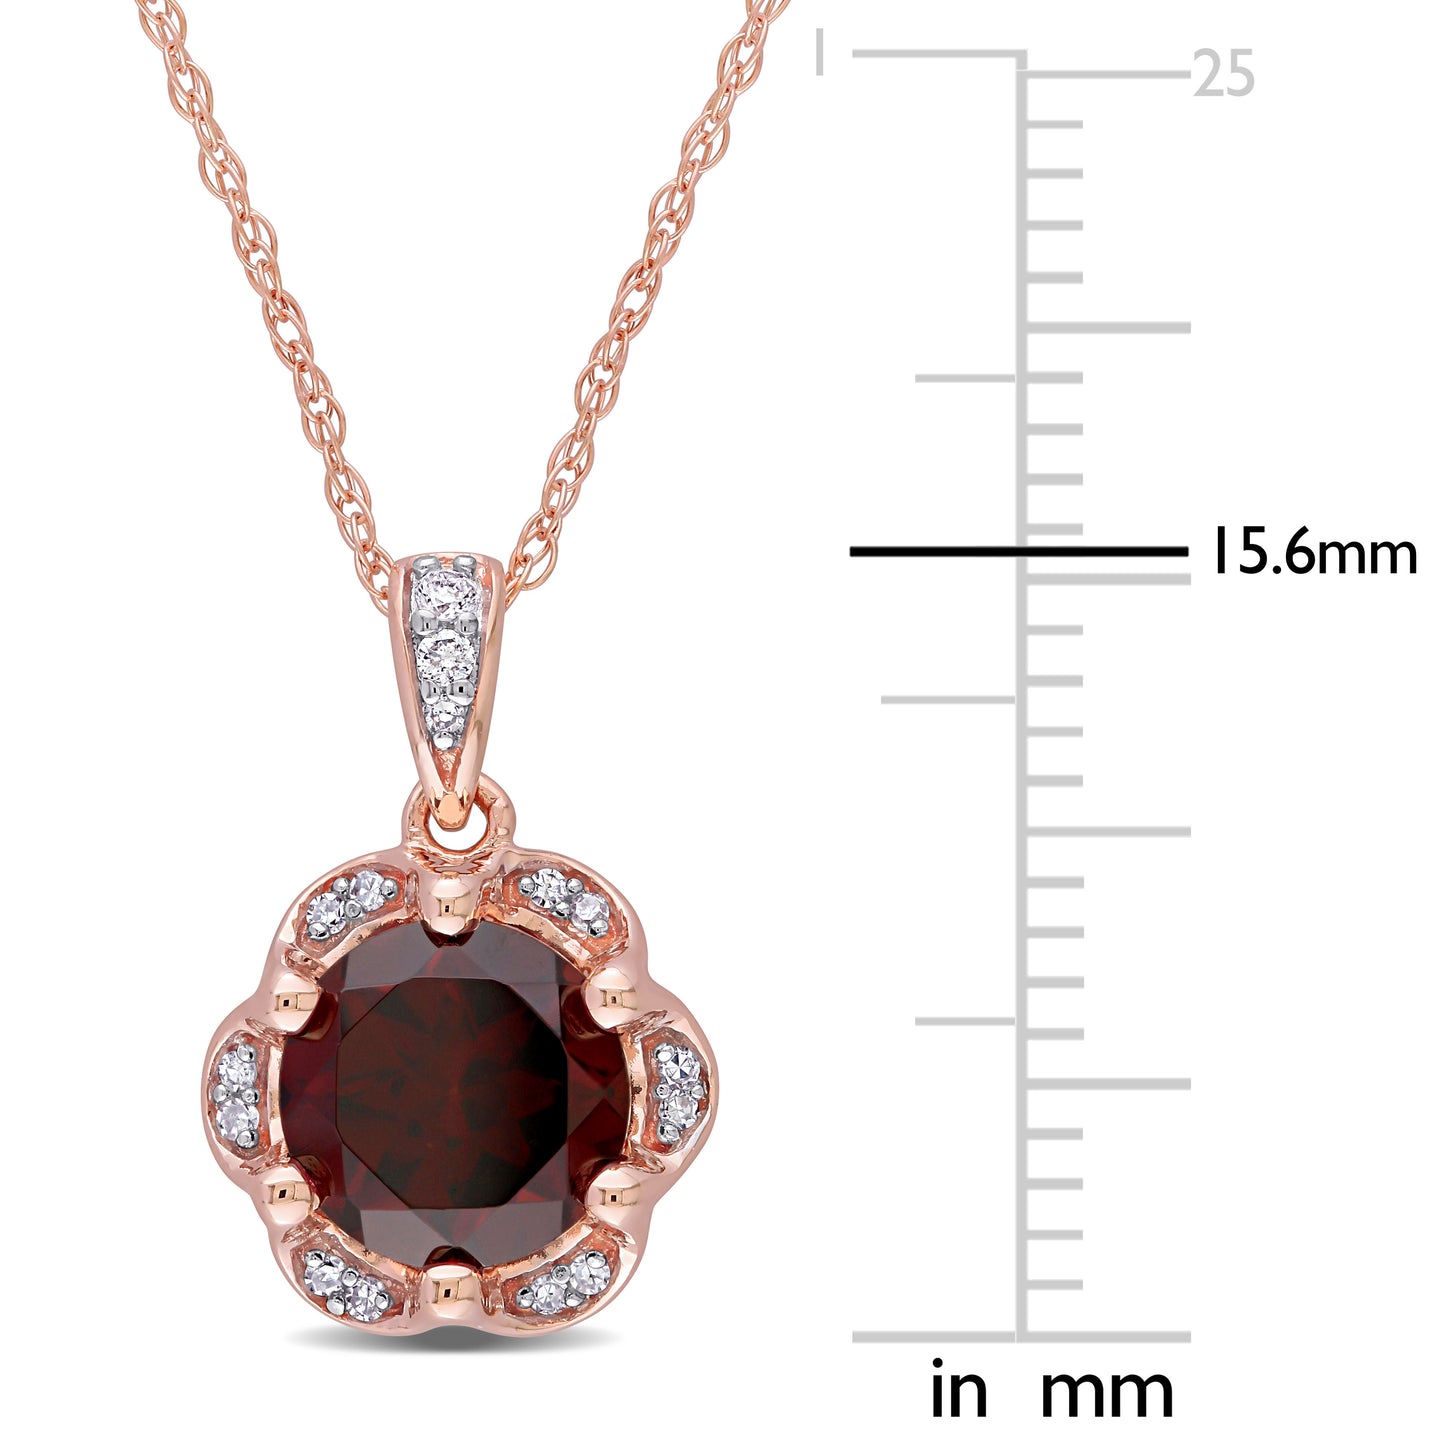 Garnet & Diamond Flower Necklace in 14k Rose Gold